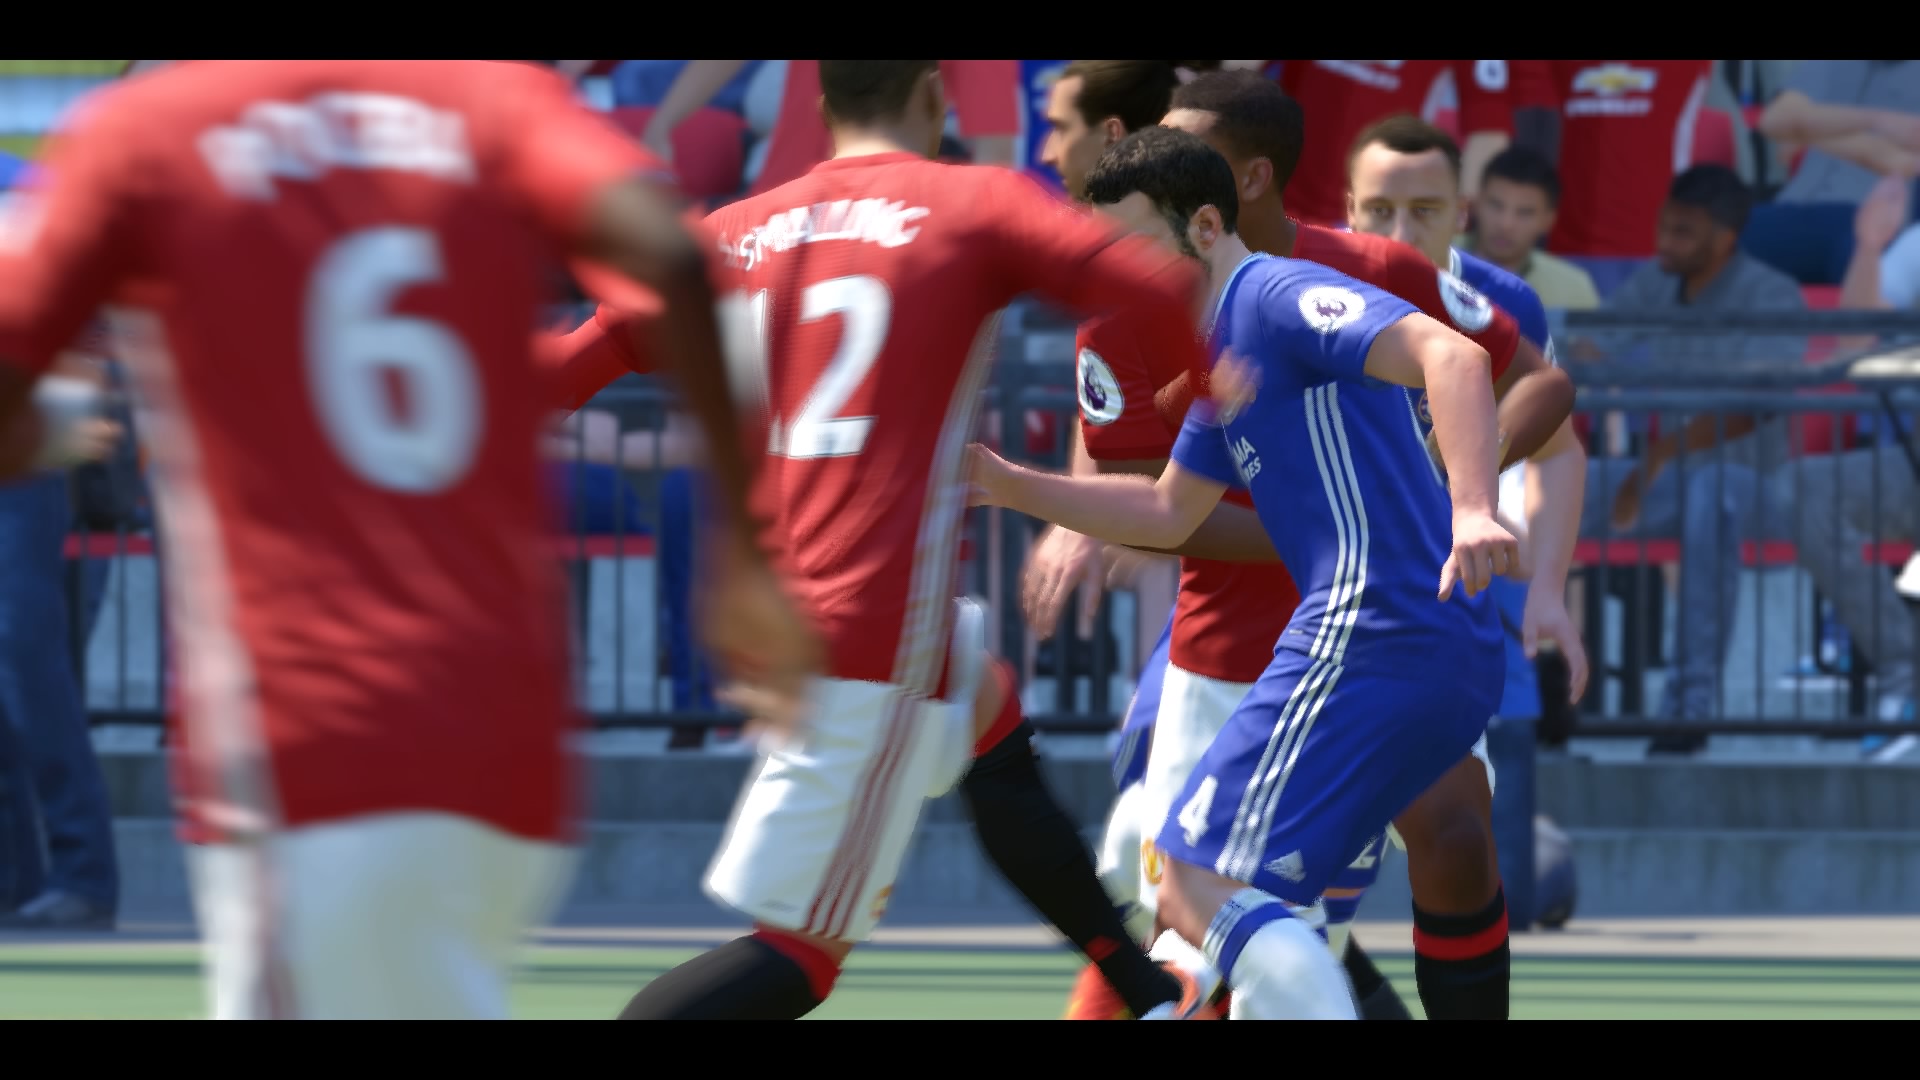 FIFA 17 Intros 0-1 CHE V MUN, 1st Half